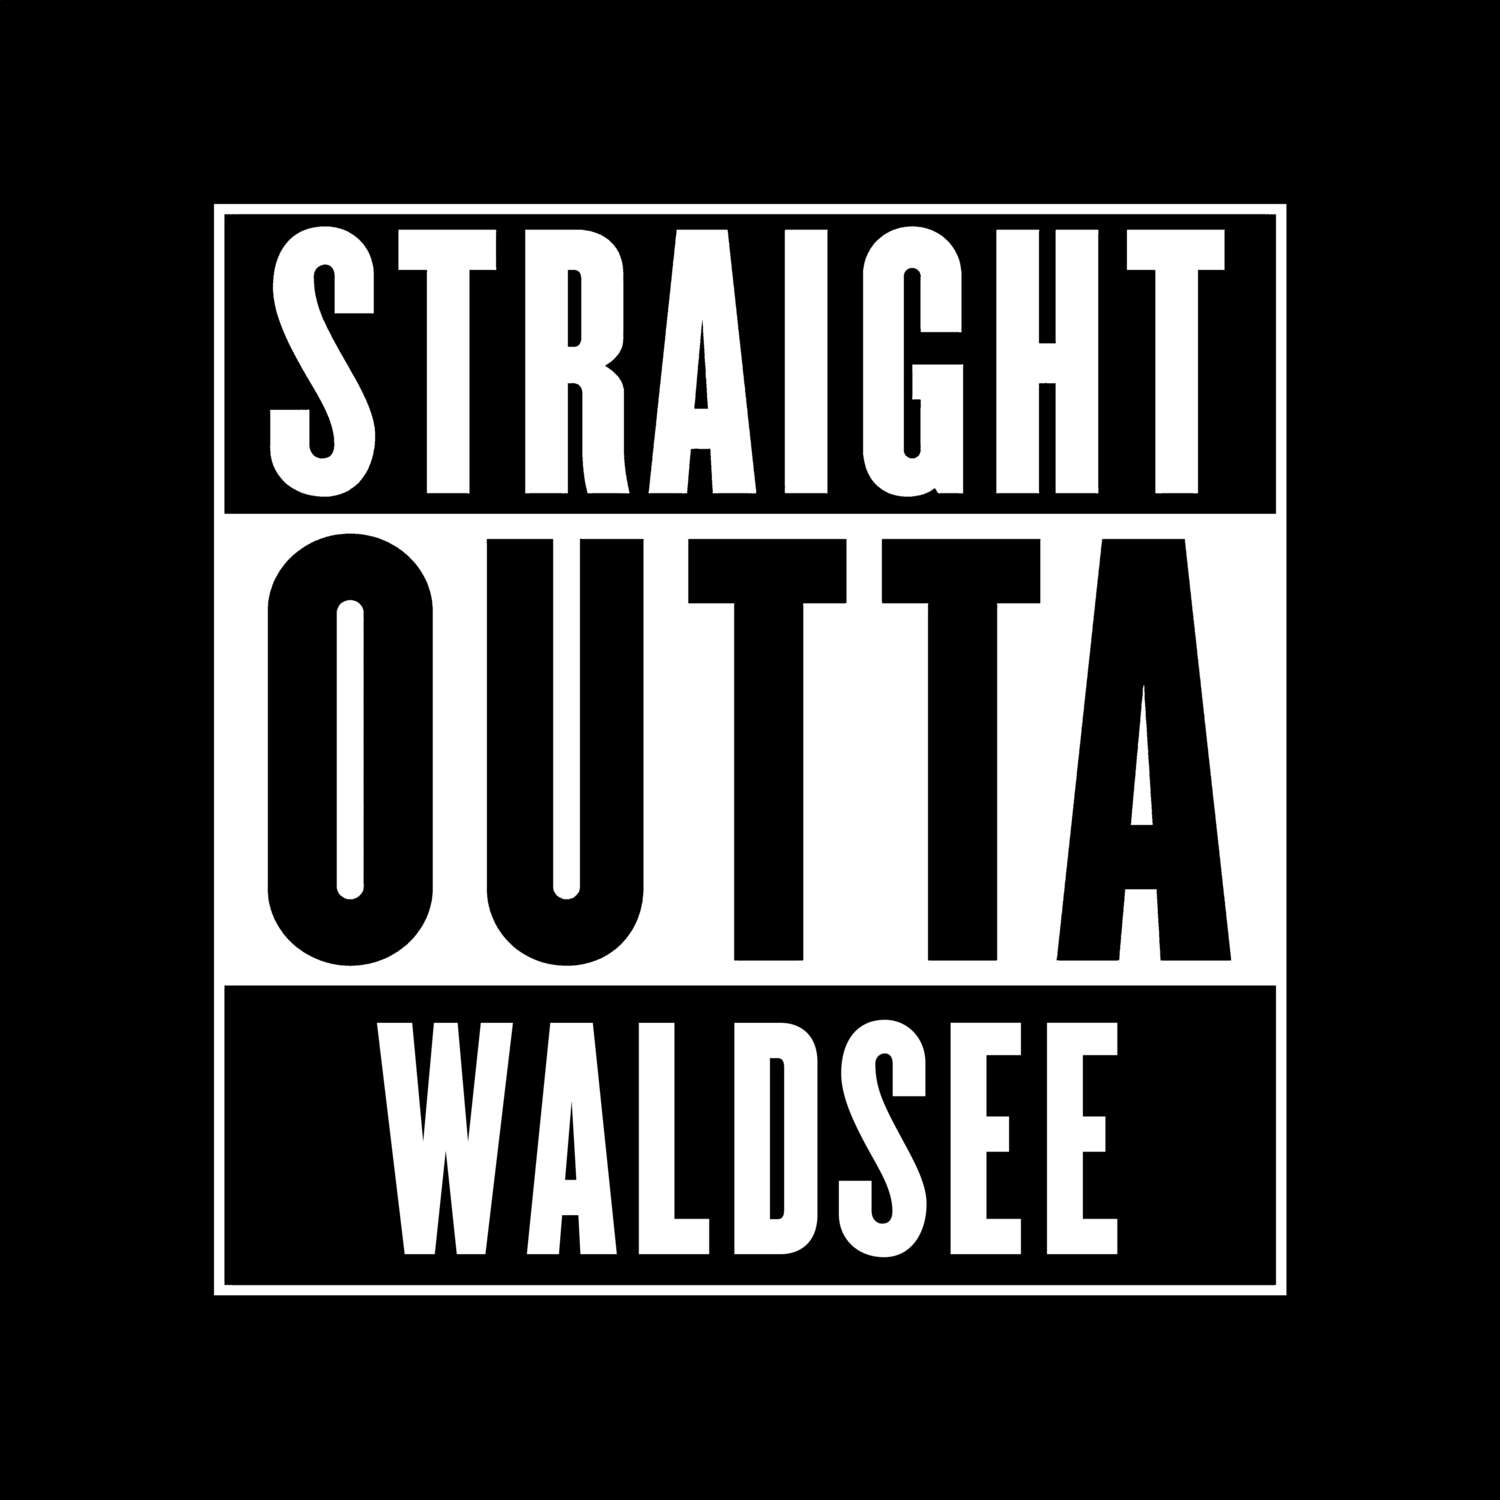 Waldsee T-Shirt »Straight Outta«